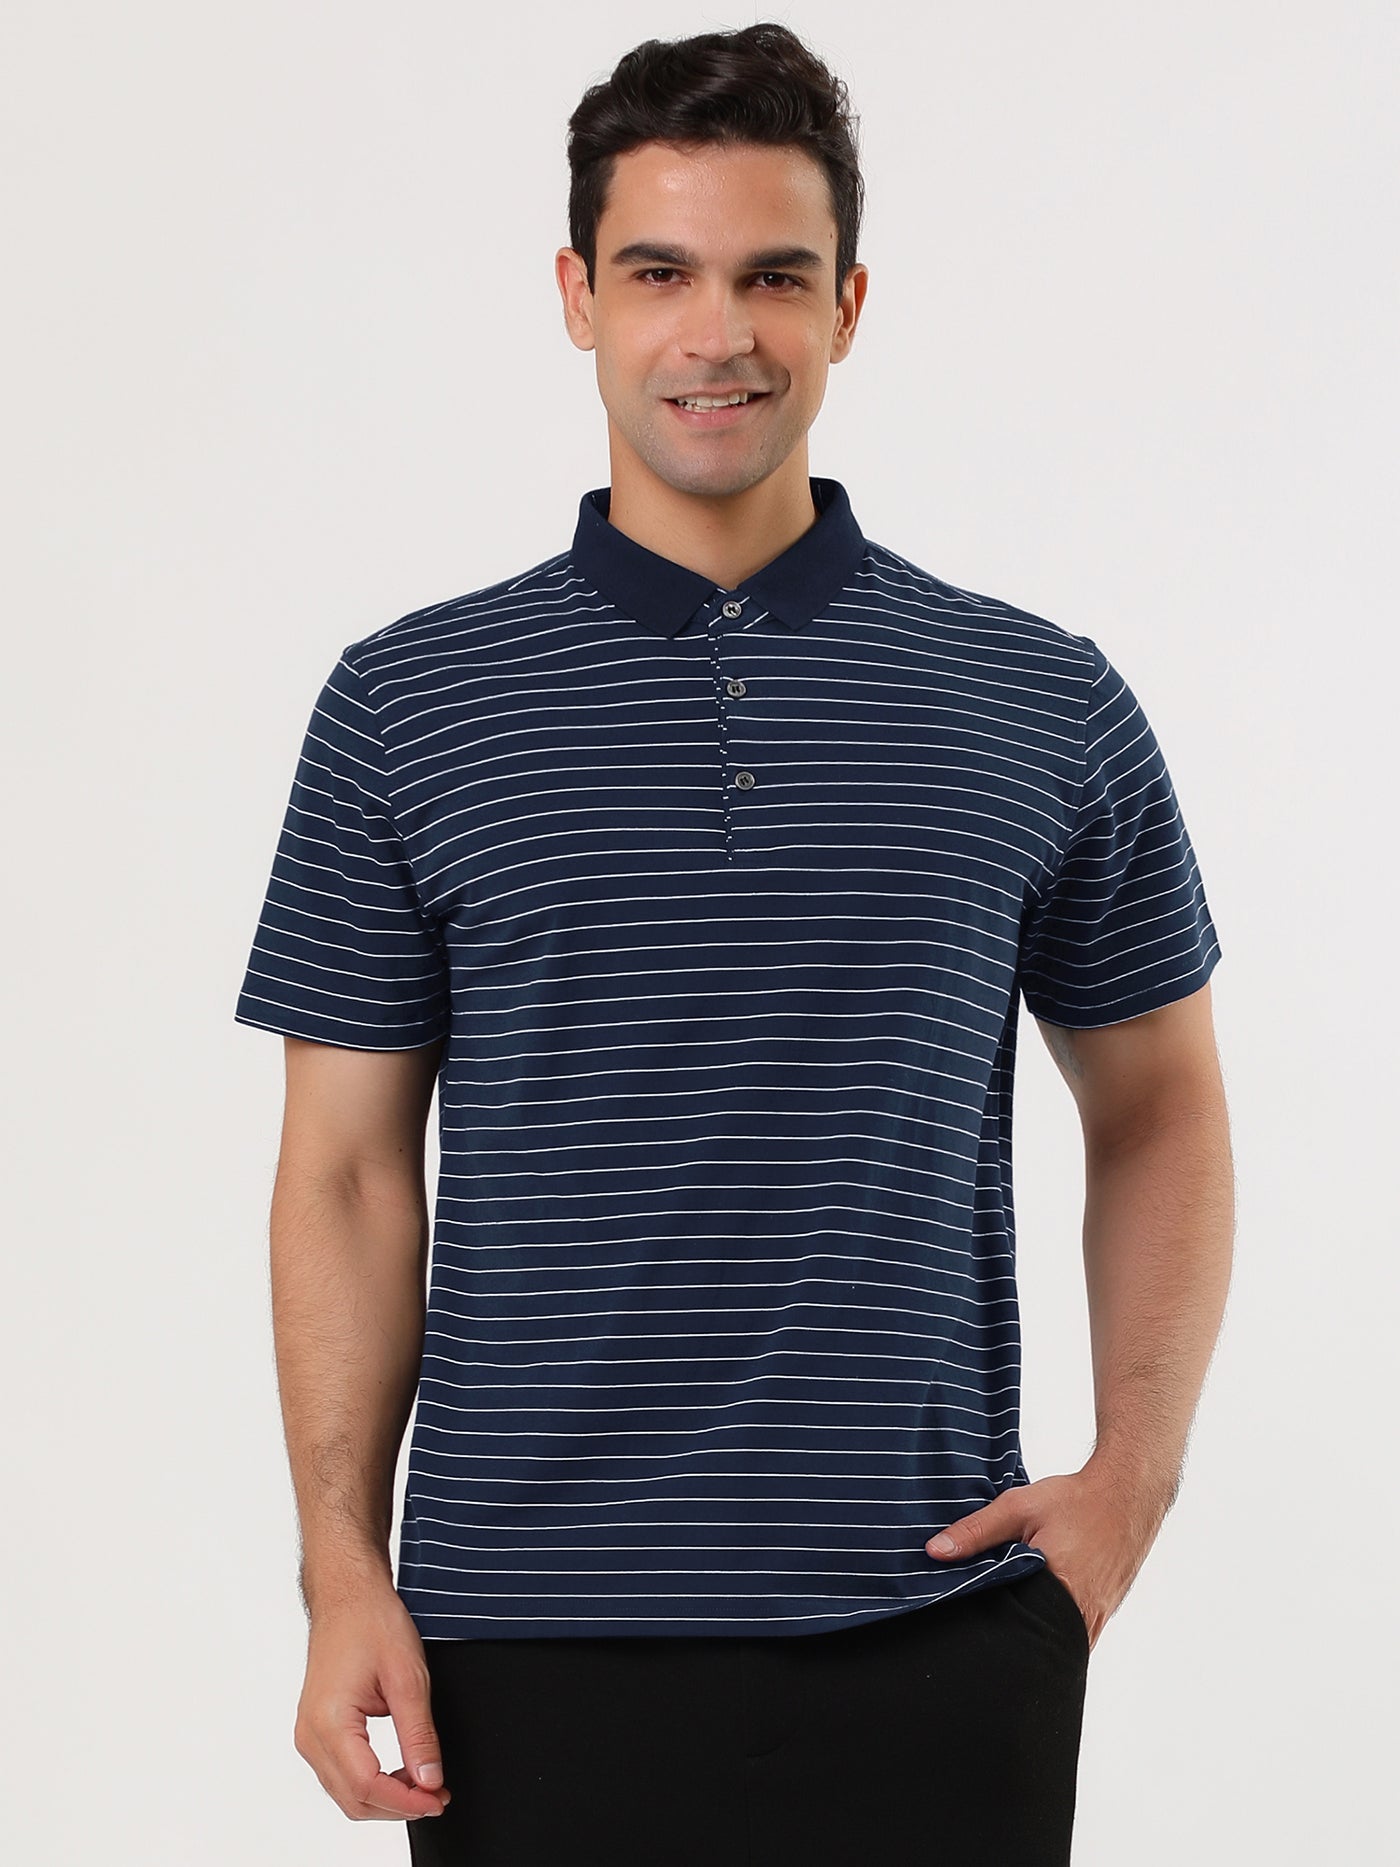 Bublédon Men's Casual Striped Golf Short Sleeves Polo Shirt